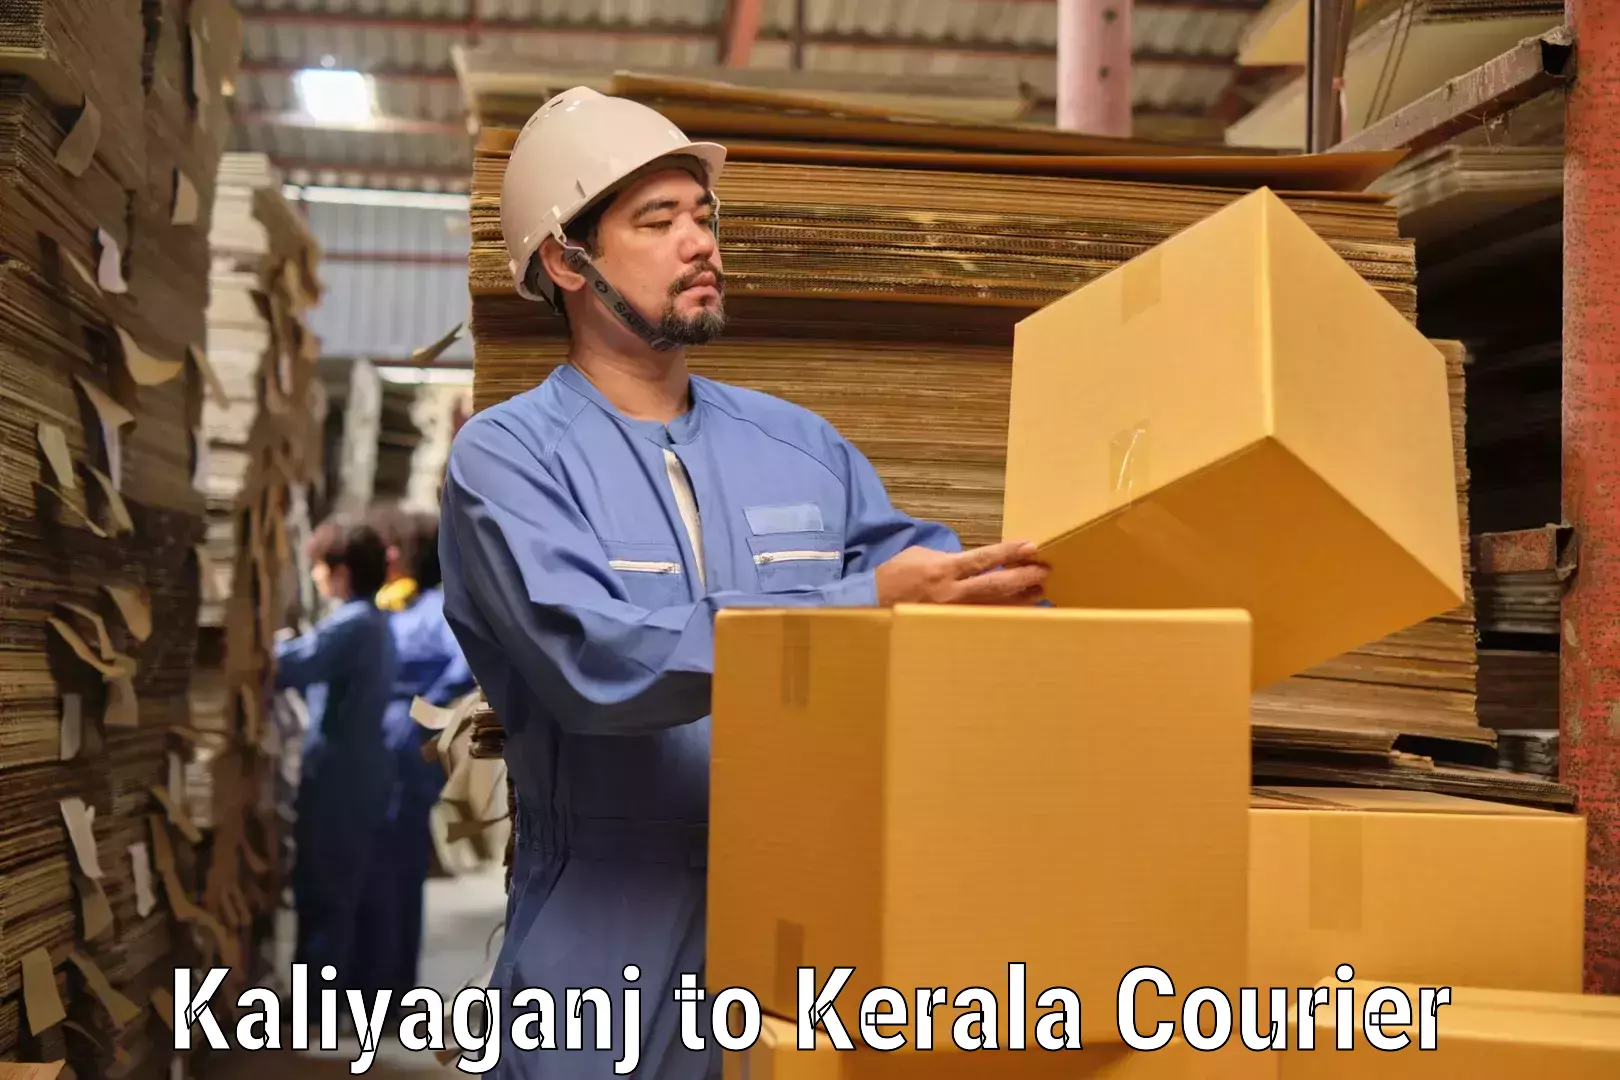 Express delivery solutions in Kaliyaganj to Kattappana